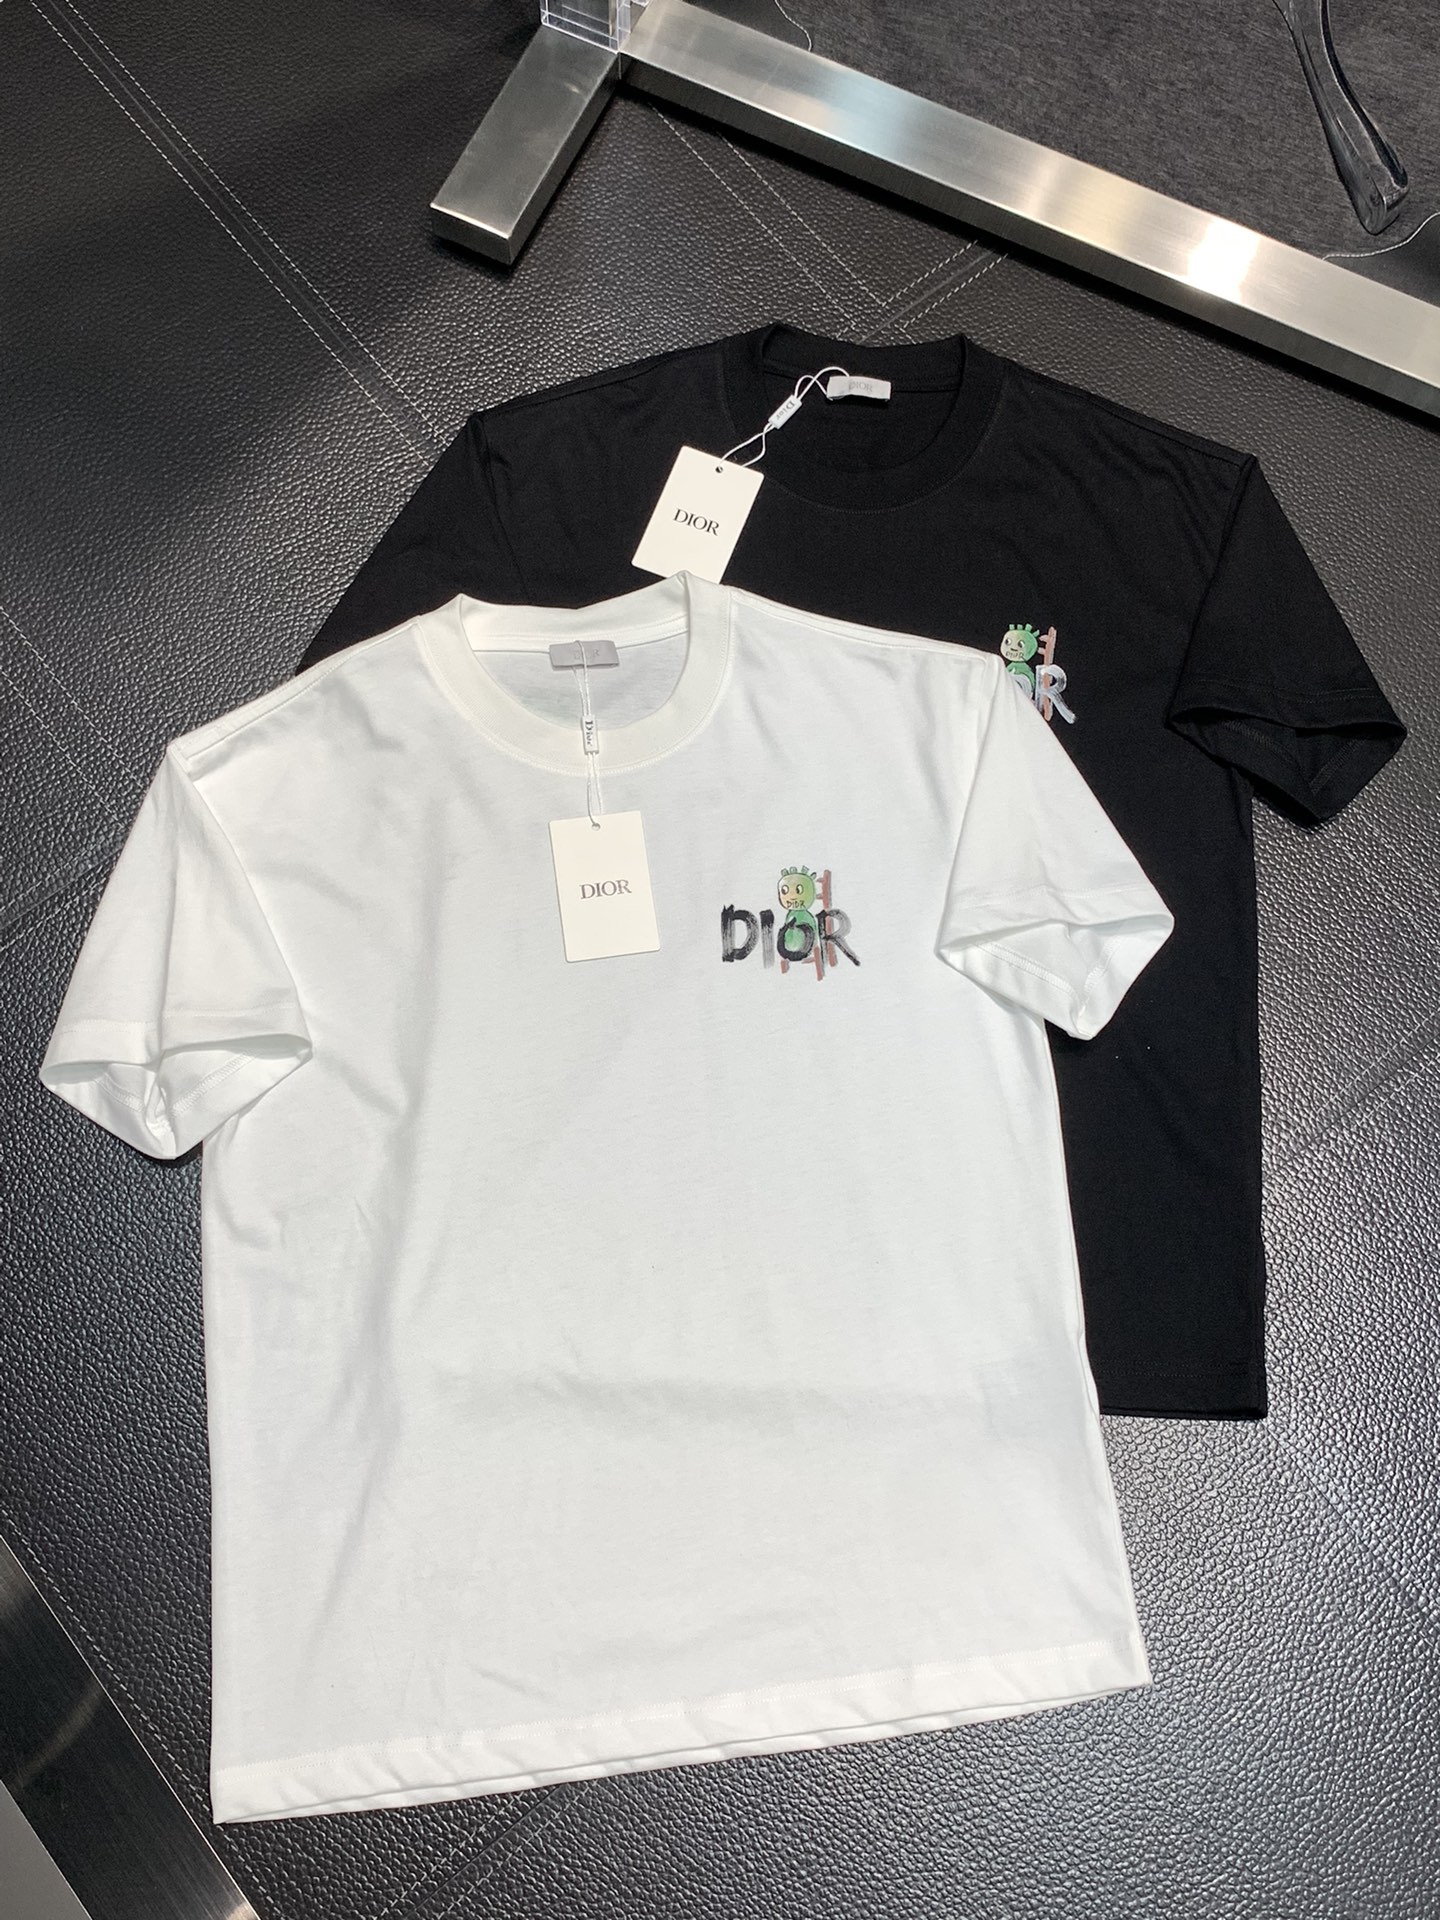 Dior Store
 Clothing T-Shirt Replica Shop
 Men Fashion Short Sleeve